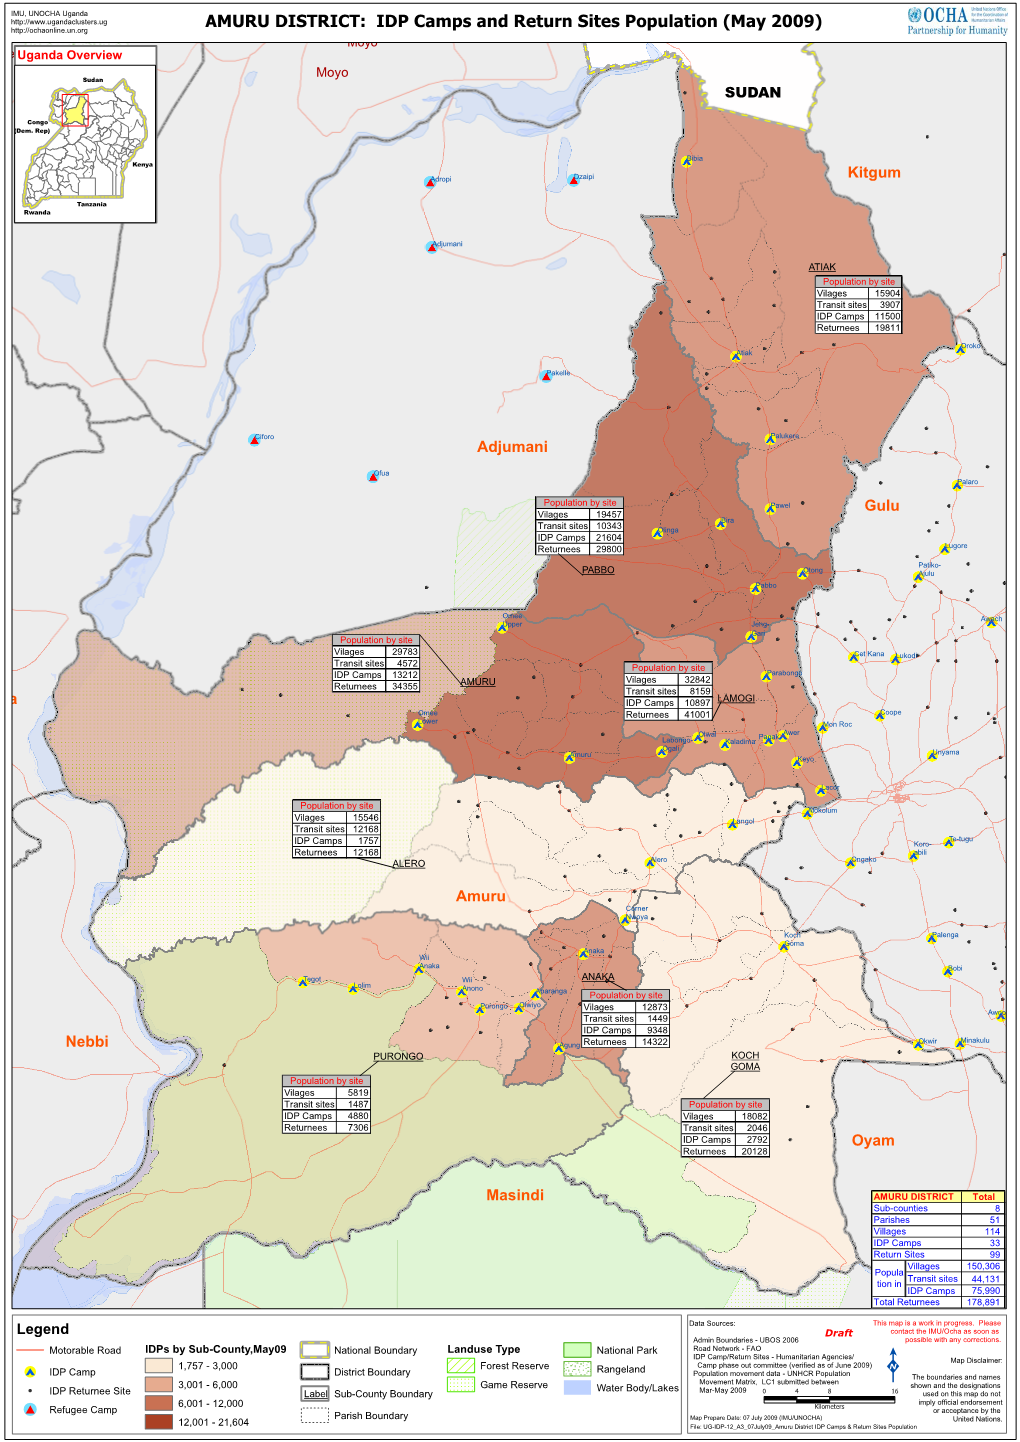 UG-IDP-12 A3 07July09 Amuru District IDP Camps & Return Sites